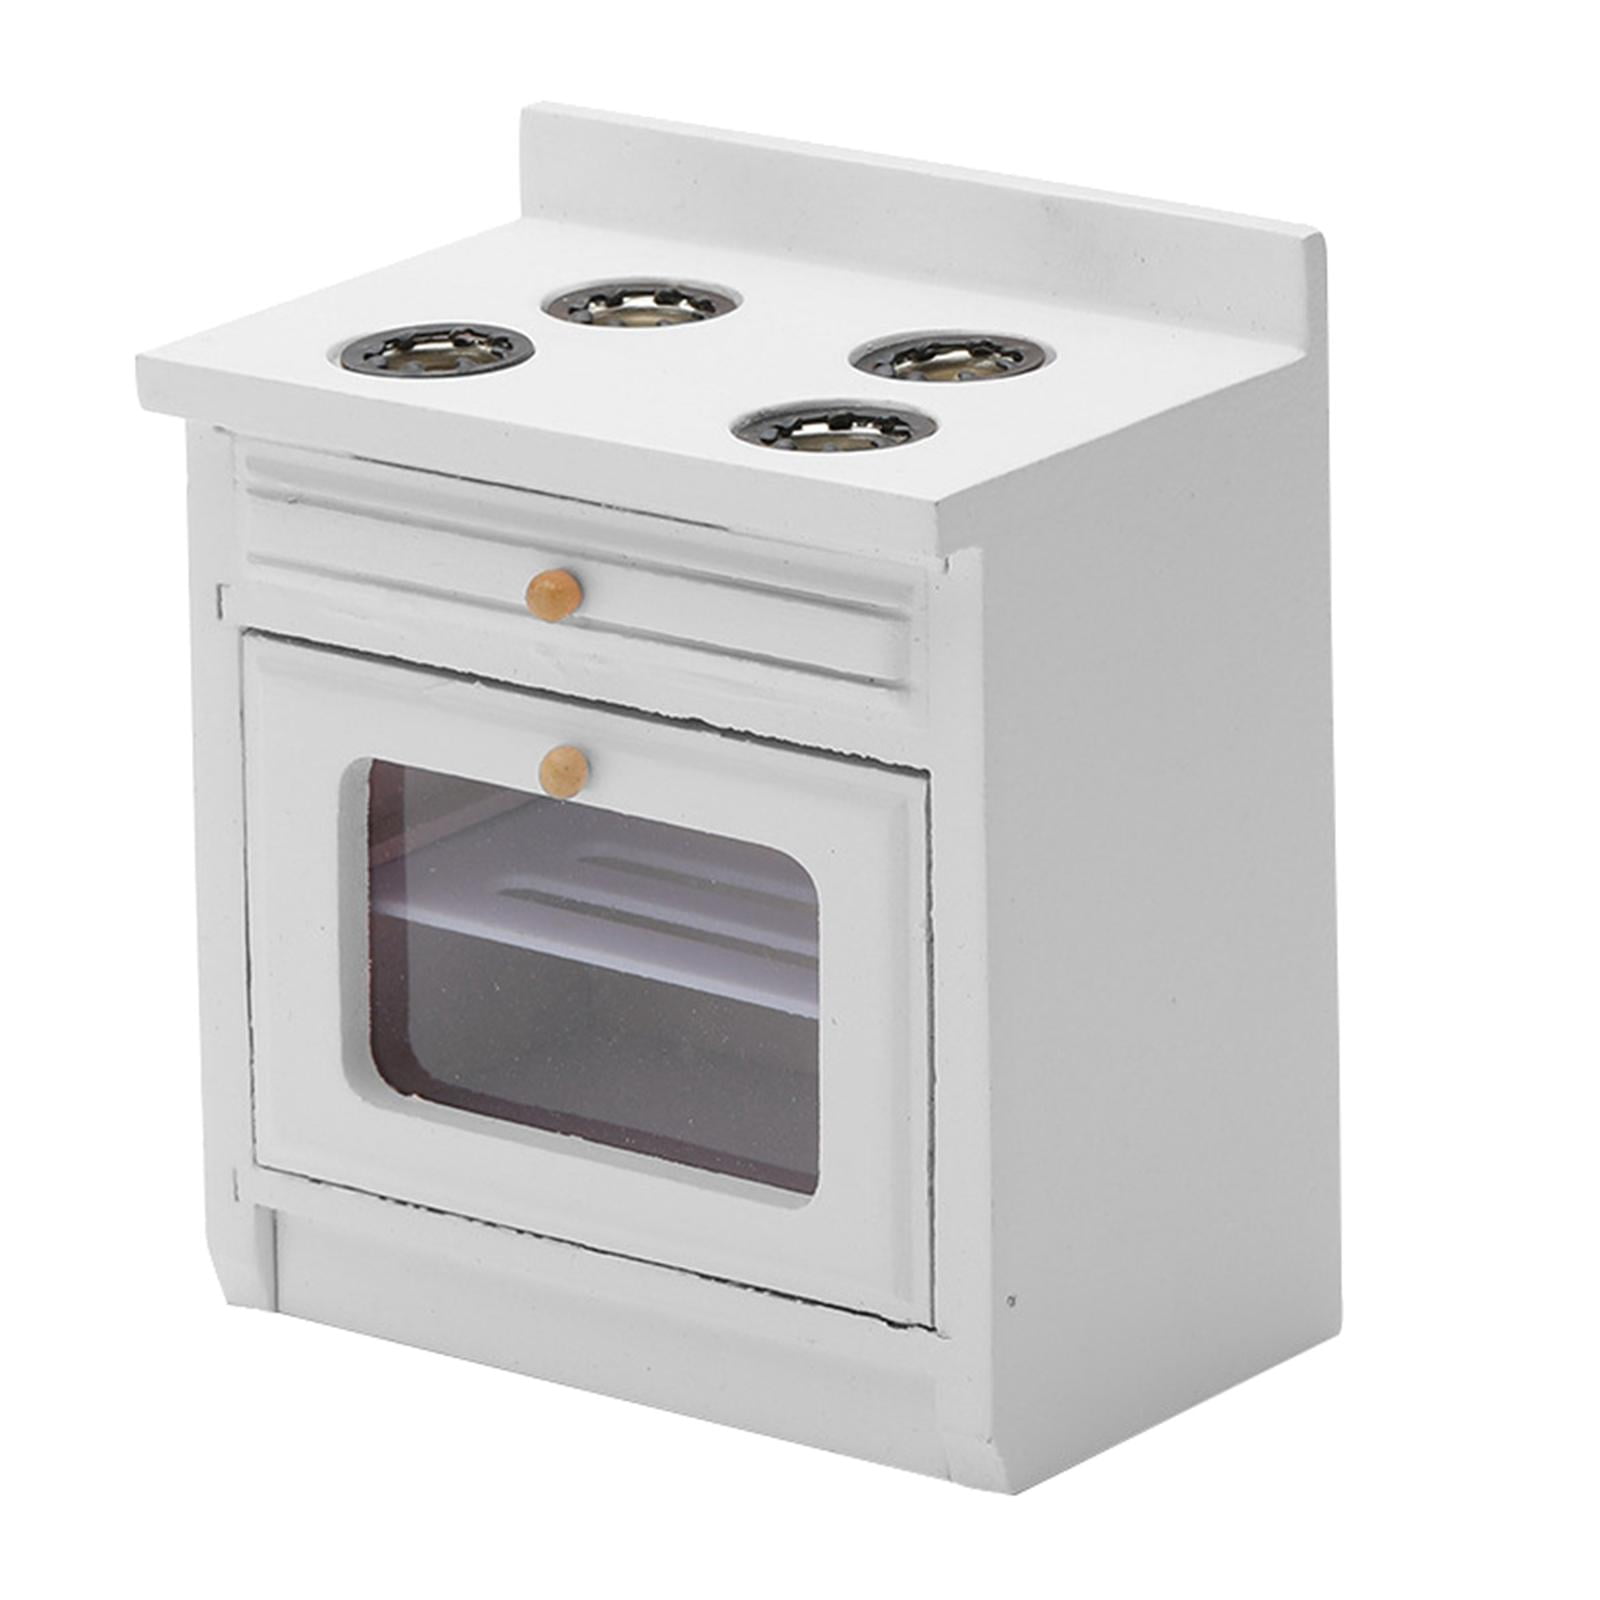 Melody Jane Dollhouse Miniature Kitchen Furniture White Wooden Modern Cooker Stove Unit